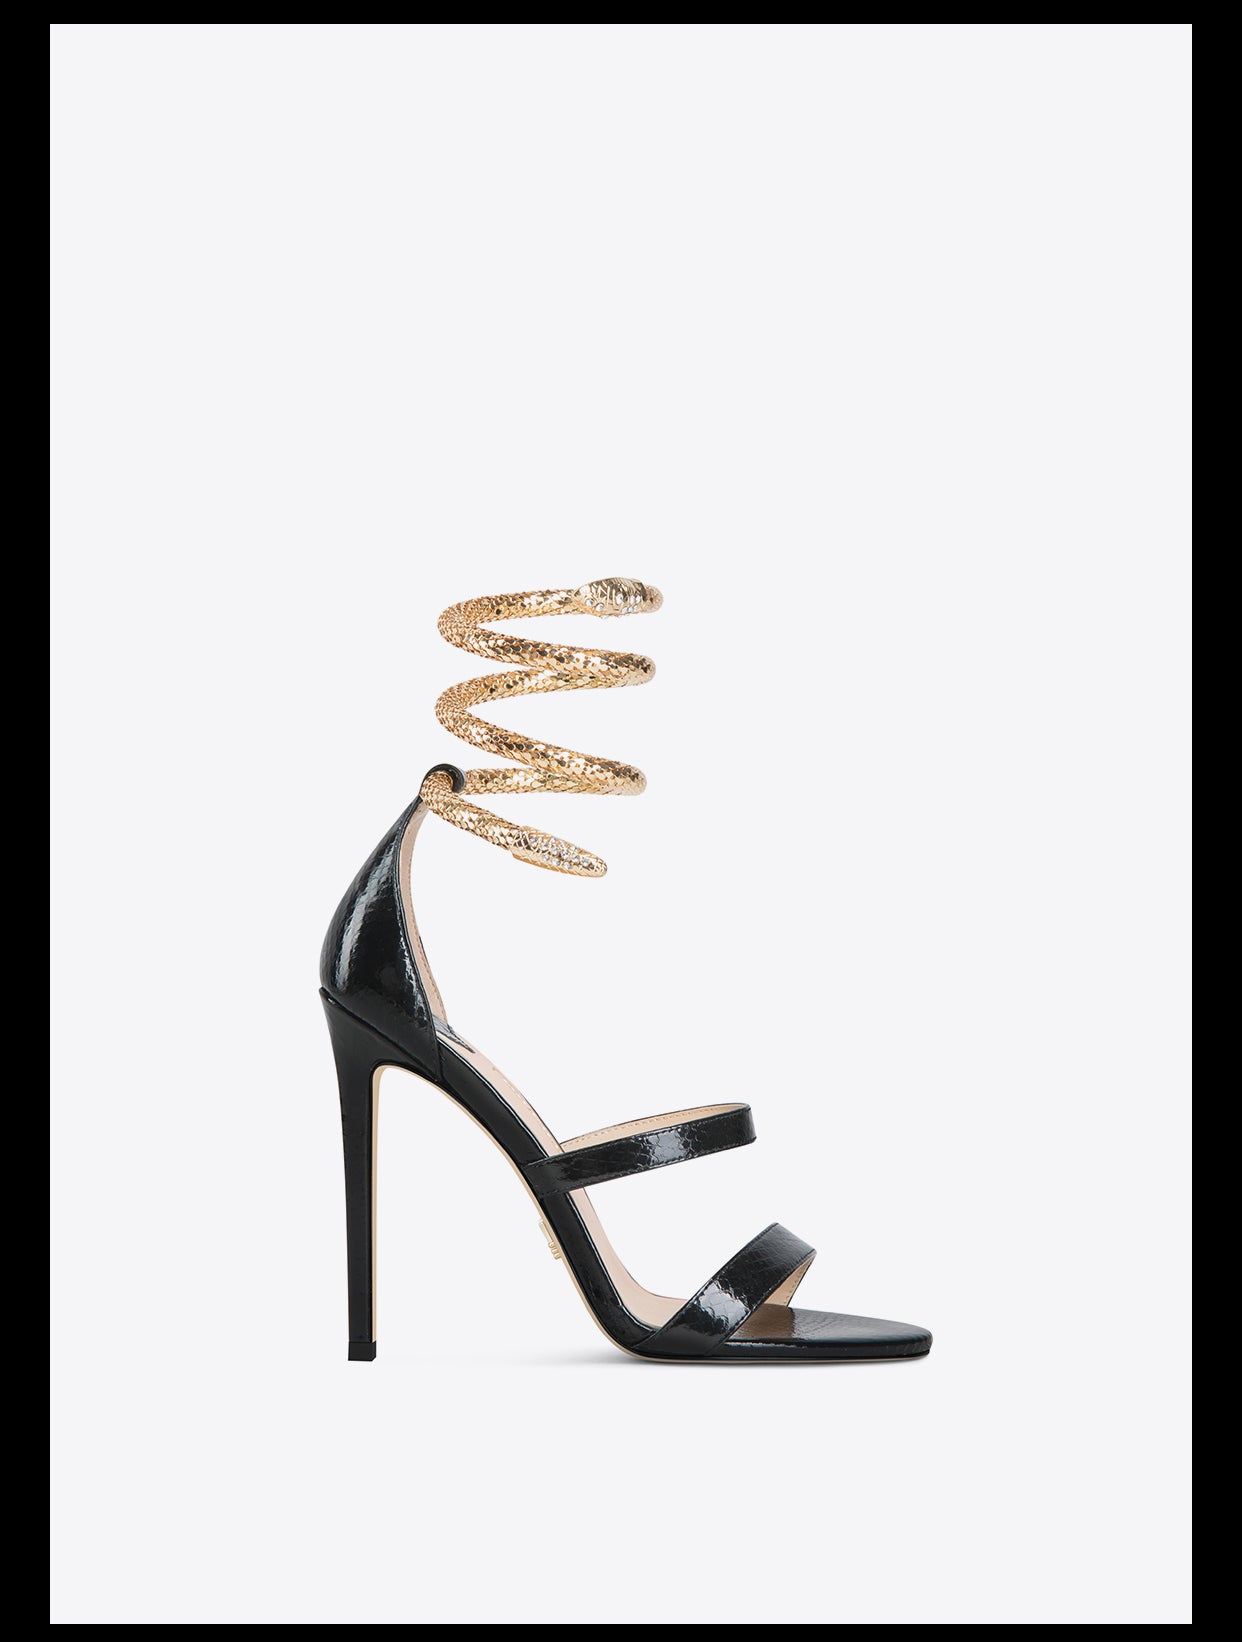 Fabfei gold high heeled sandals  - Jida